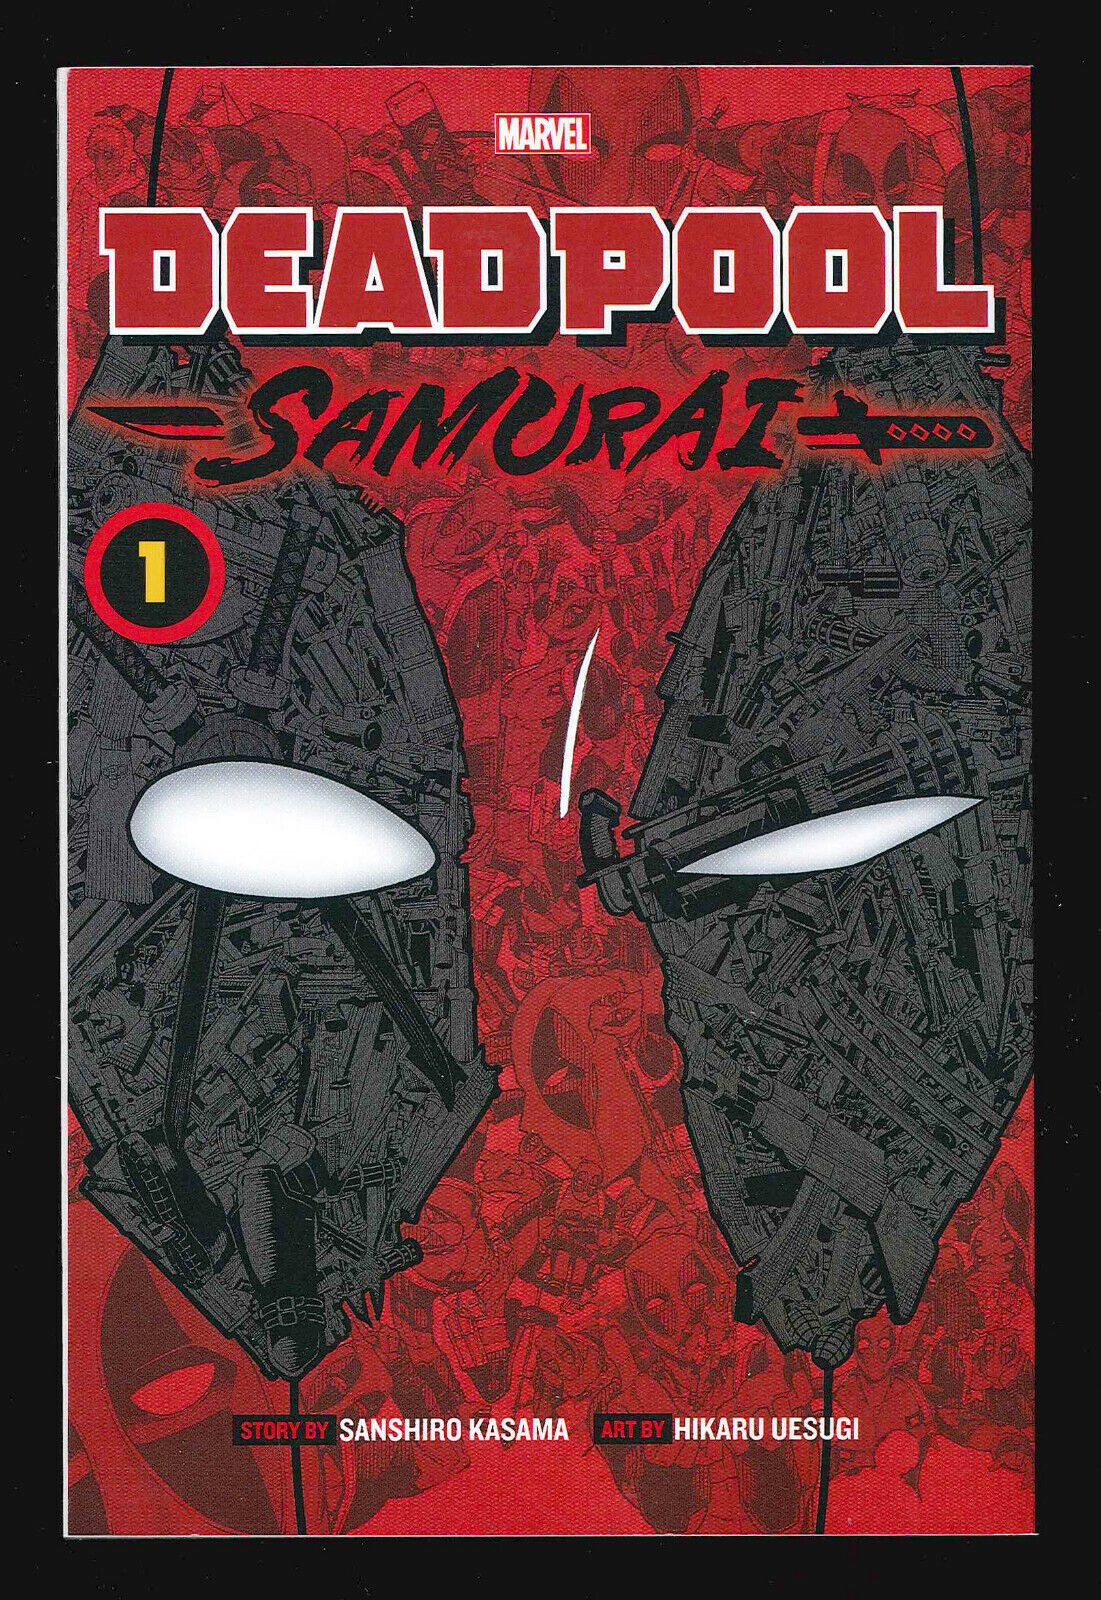 Deadpool: SAMURAI #1 English Edition Marvel x Shonen Jump+ / Sakura Spider VIZ